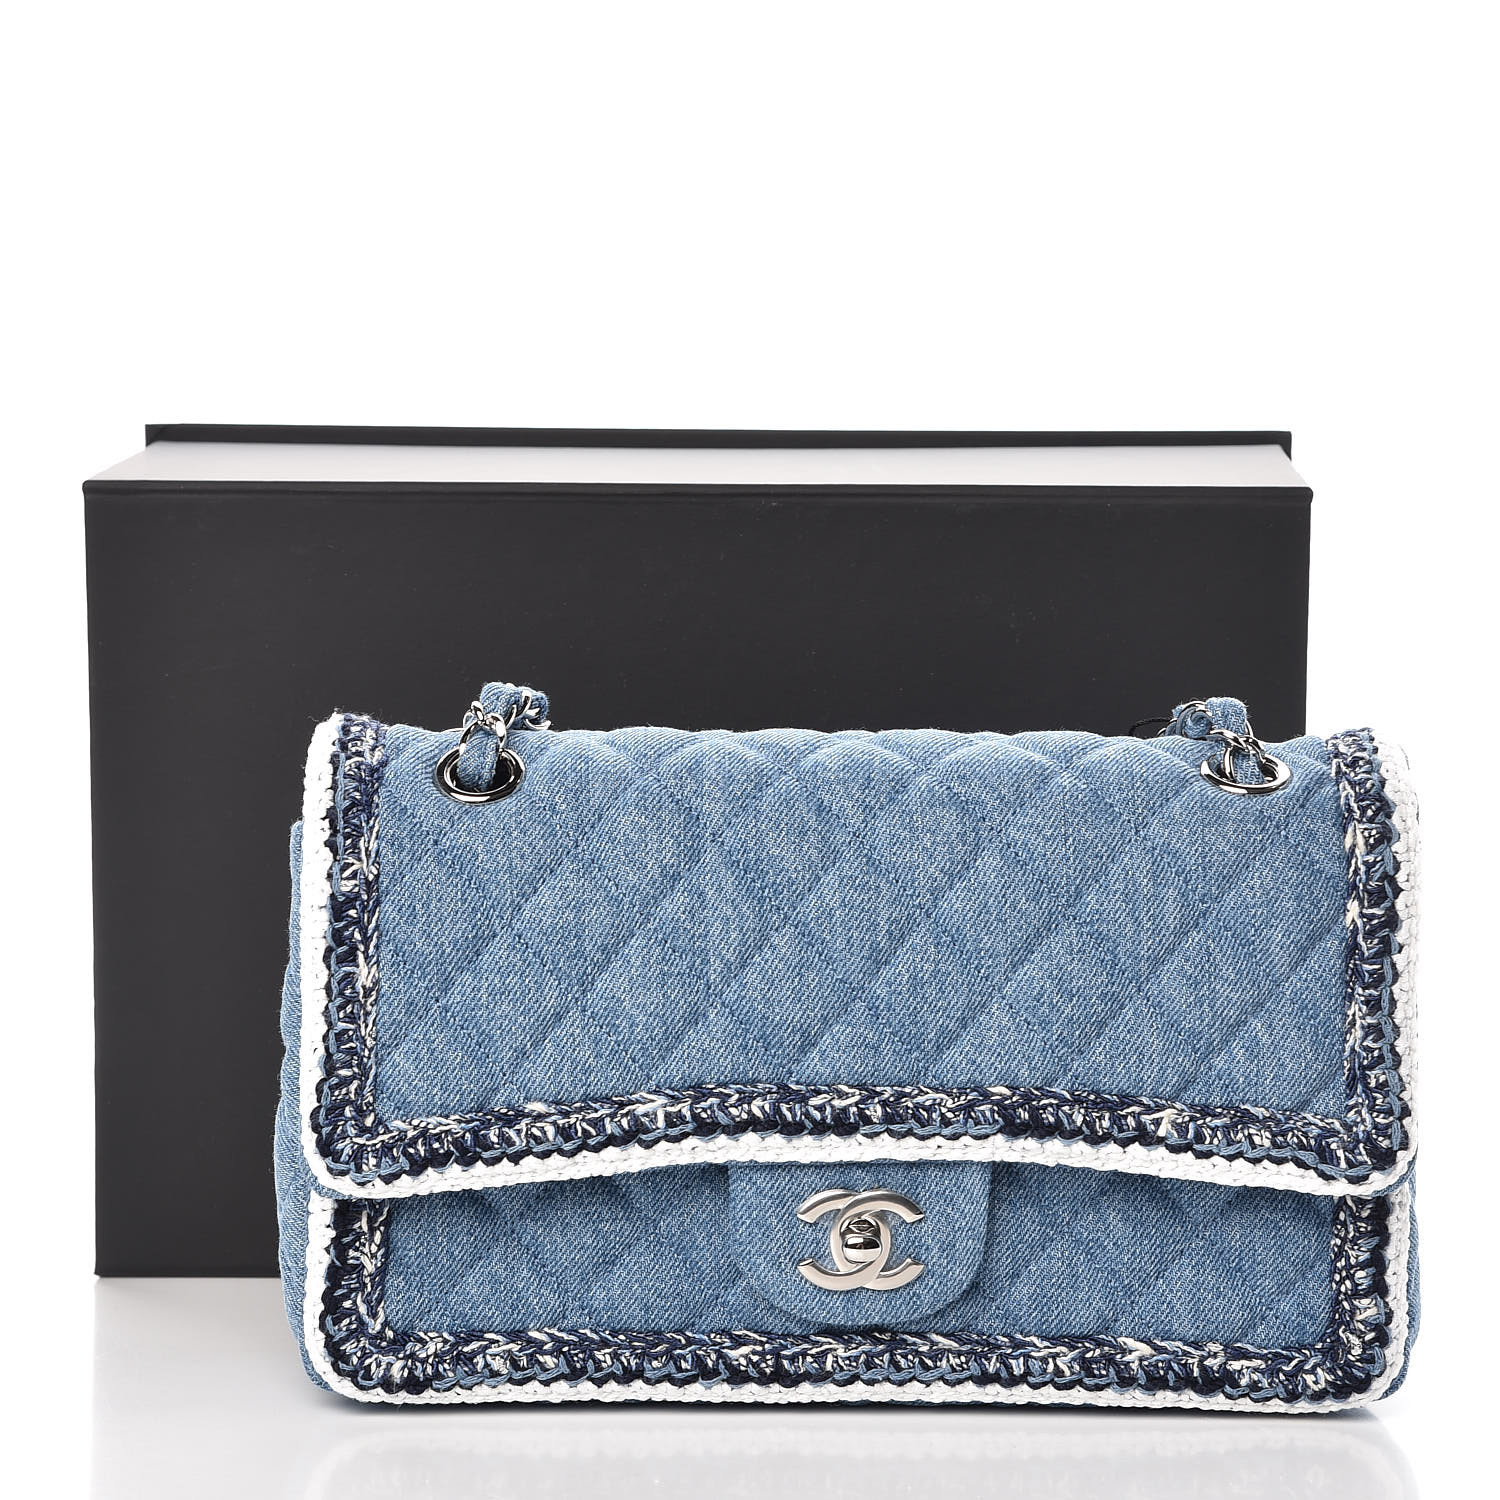 Chanel Flap Bag Neiman Marcus | IQS Executive